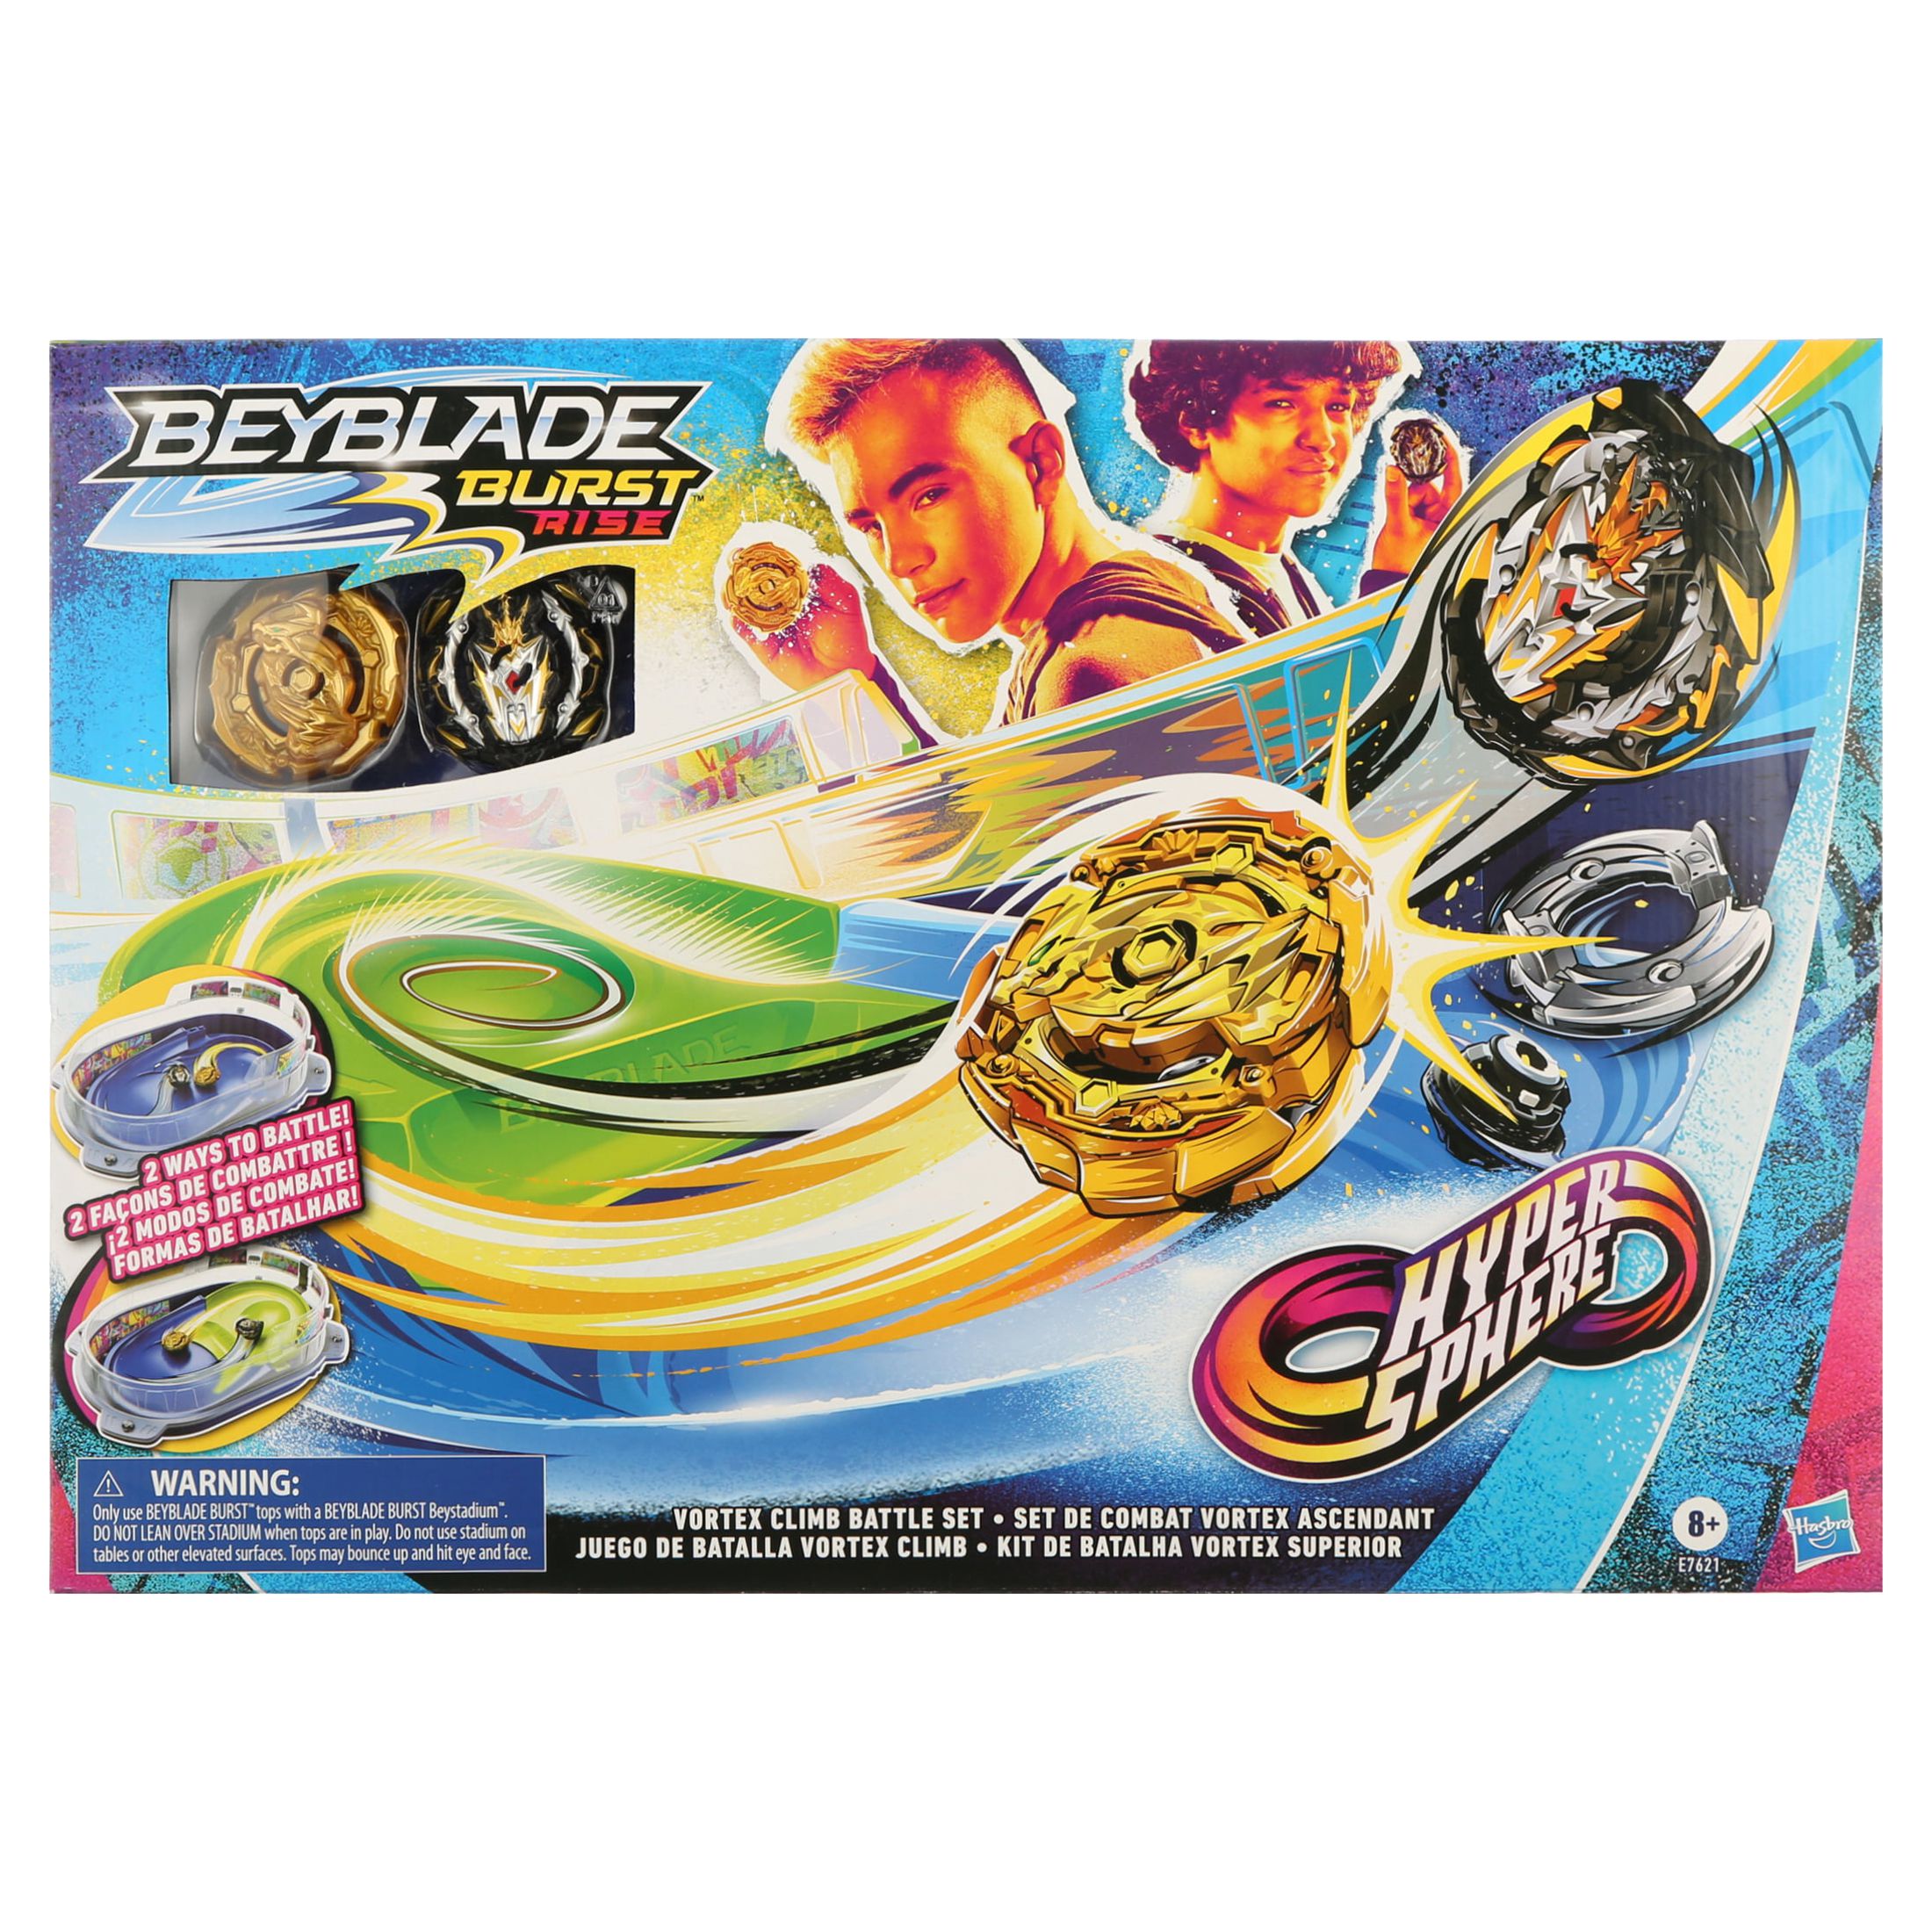 Beyblade Burst Rise Hypersphere Vortex Climb Battling Top Set Kids Toy for Boys and Girls - image 4 of 12